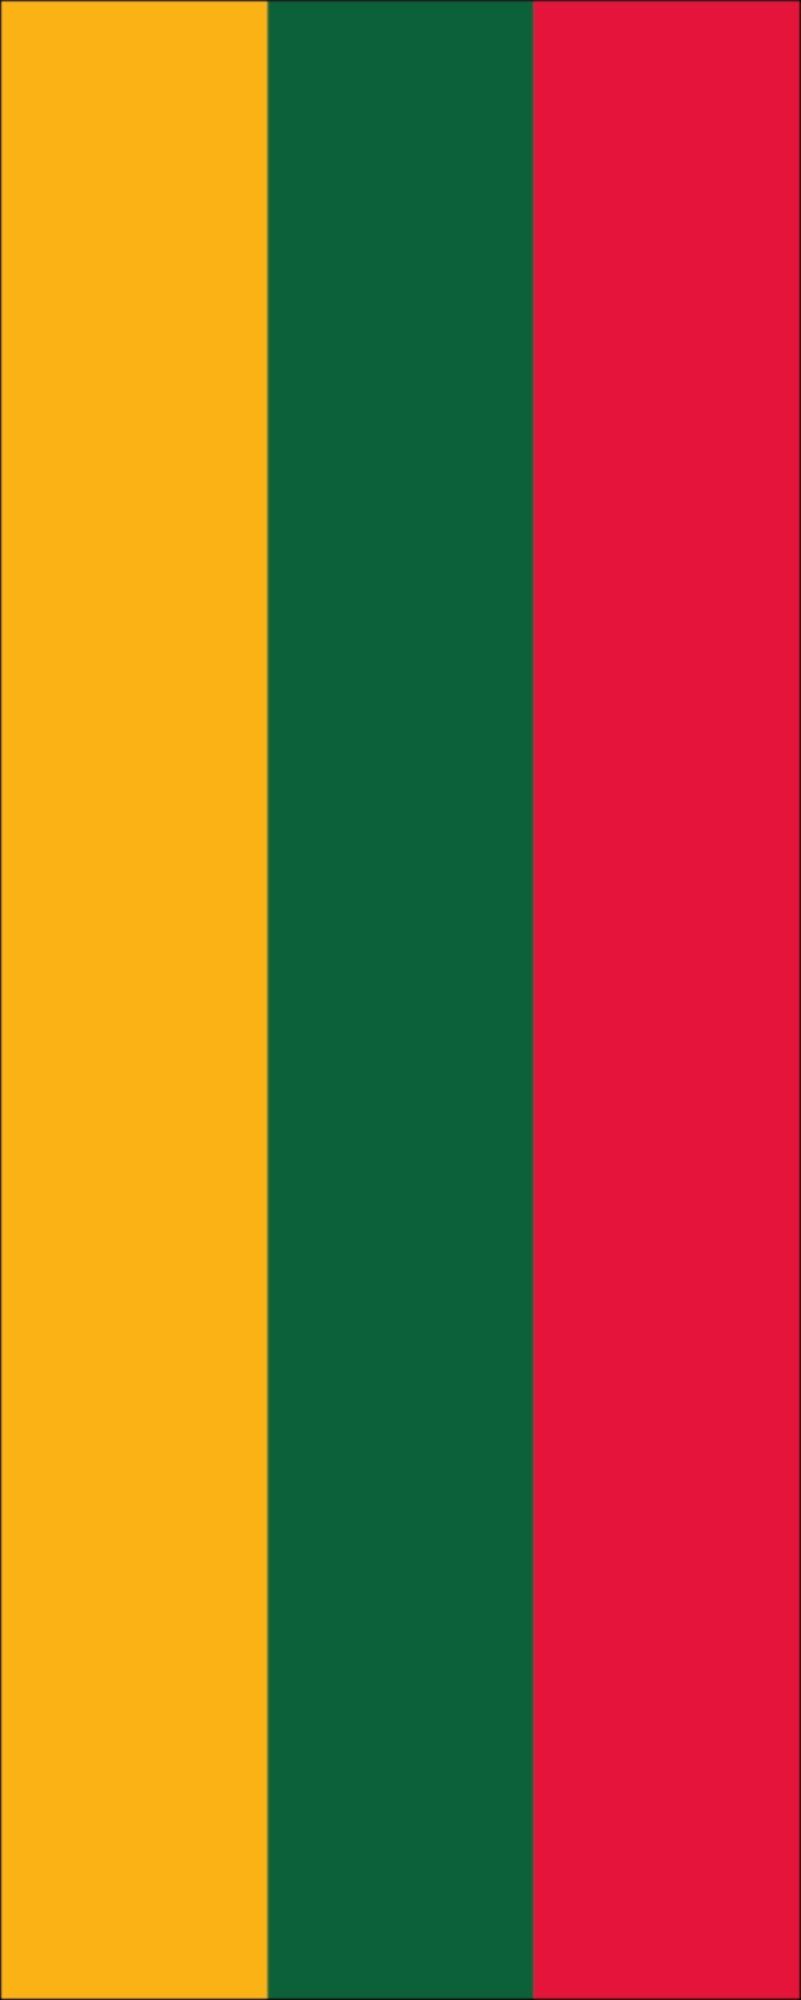 160 Litauen g/m² flaggenmeer Hochformat Flagge